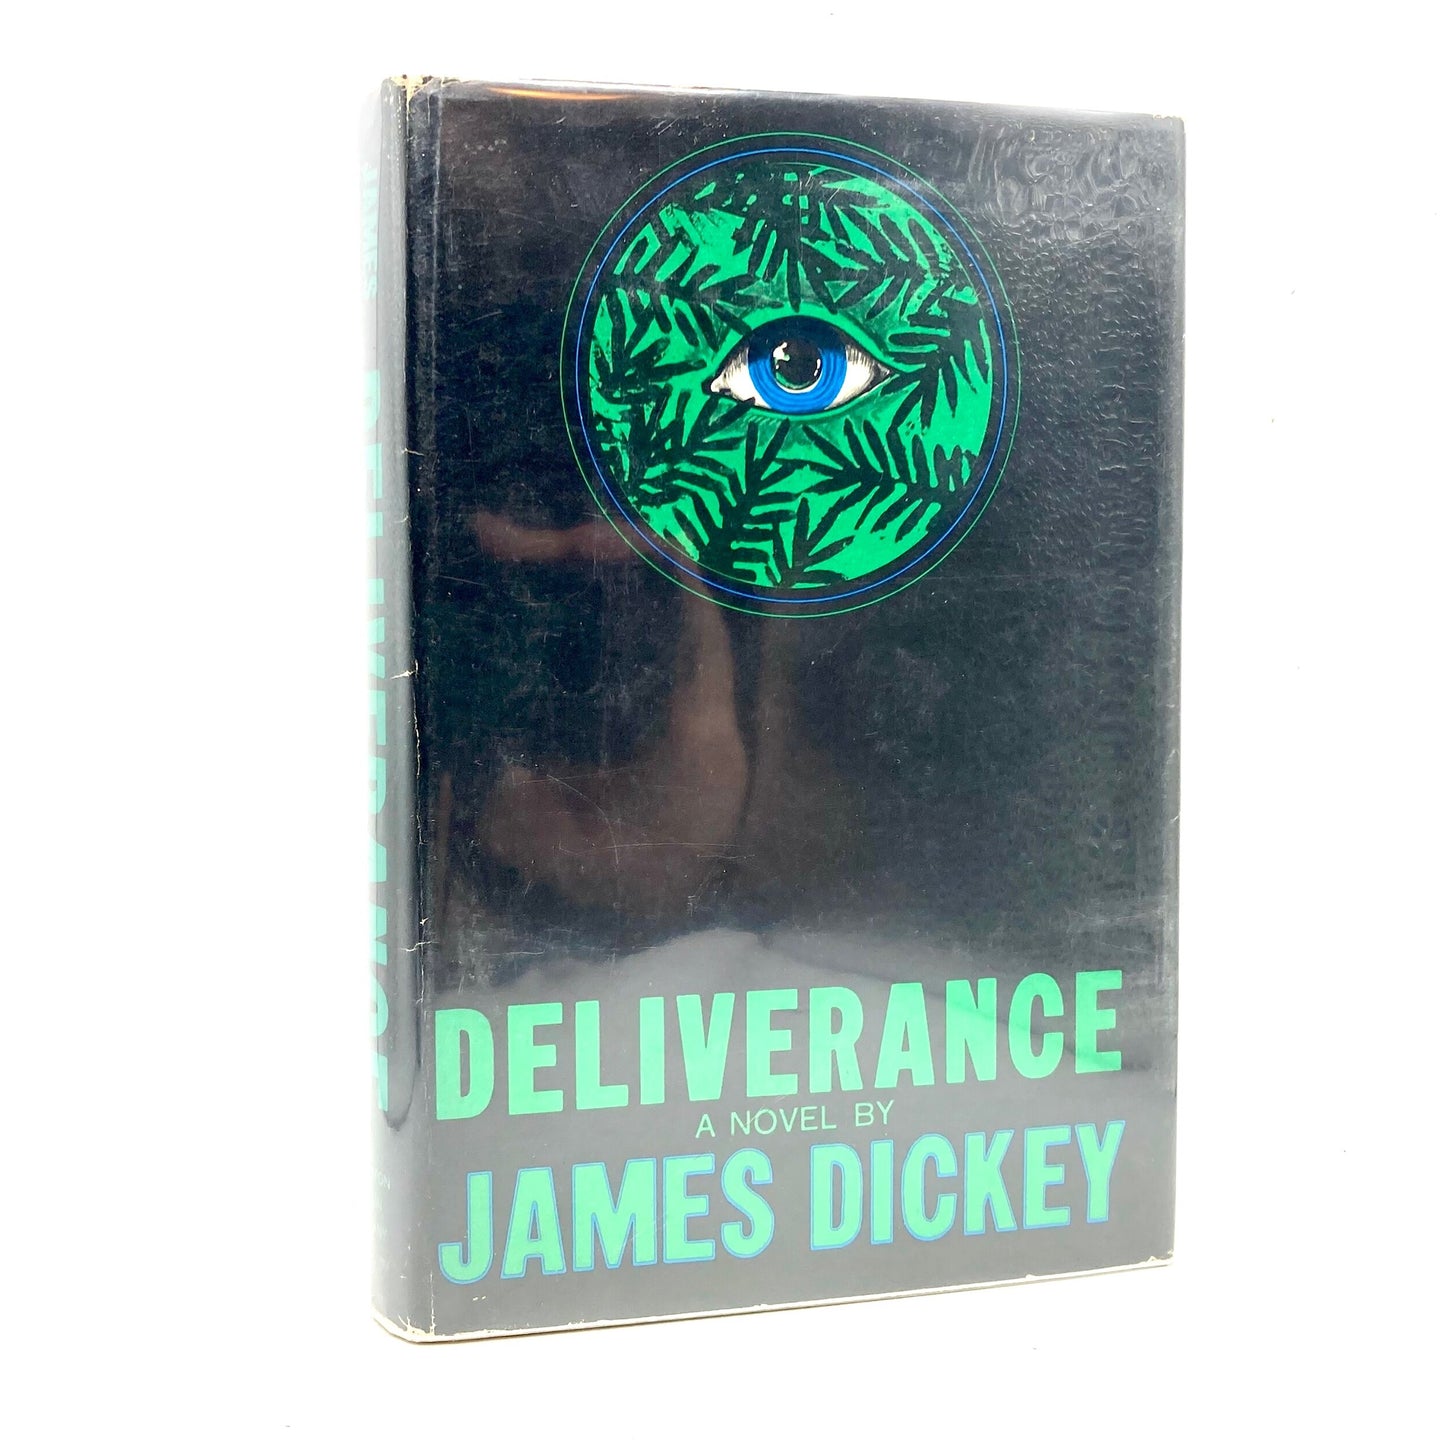 DICKEY, James "Deliverance" [Houghton Mifflin, 1970] - Buzz Bookstore